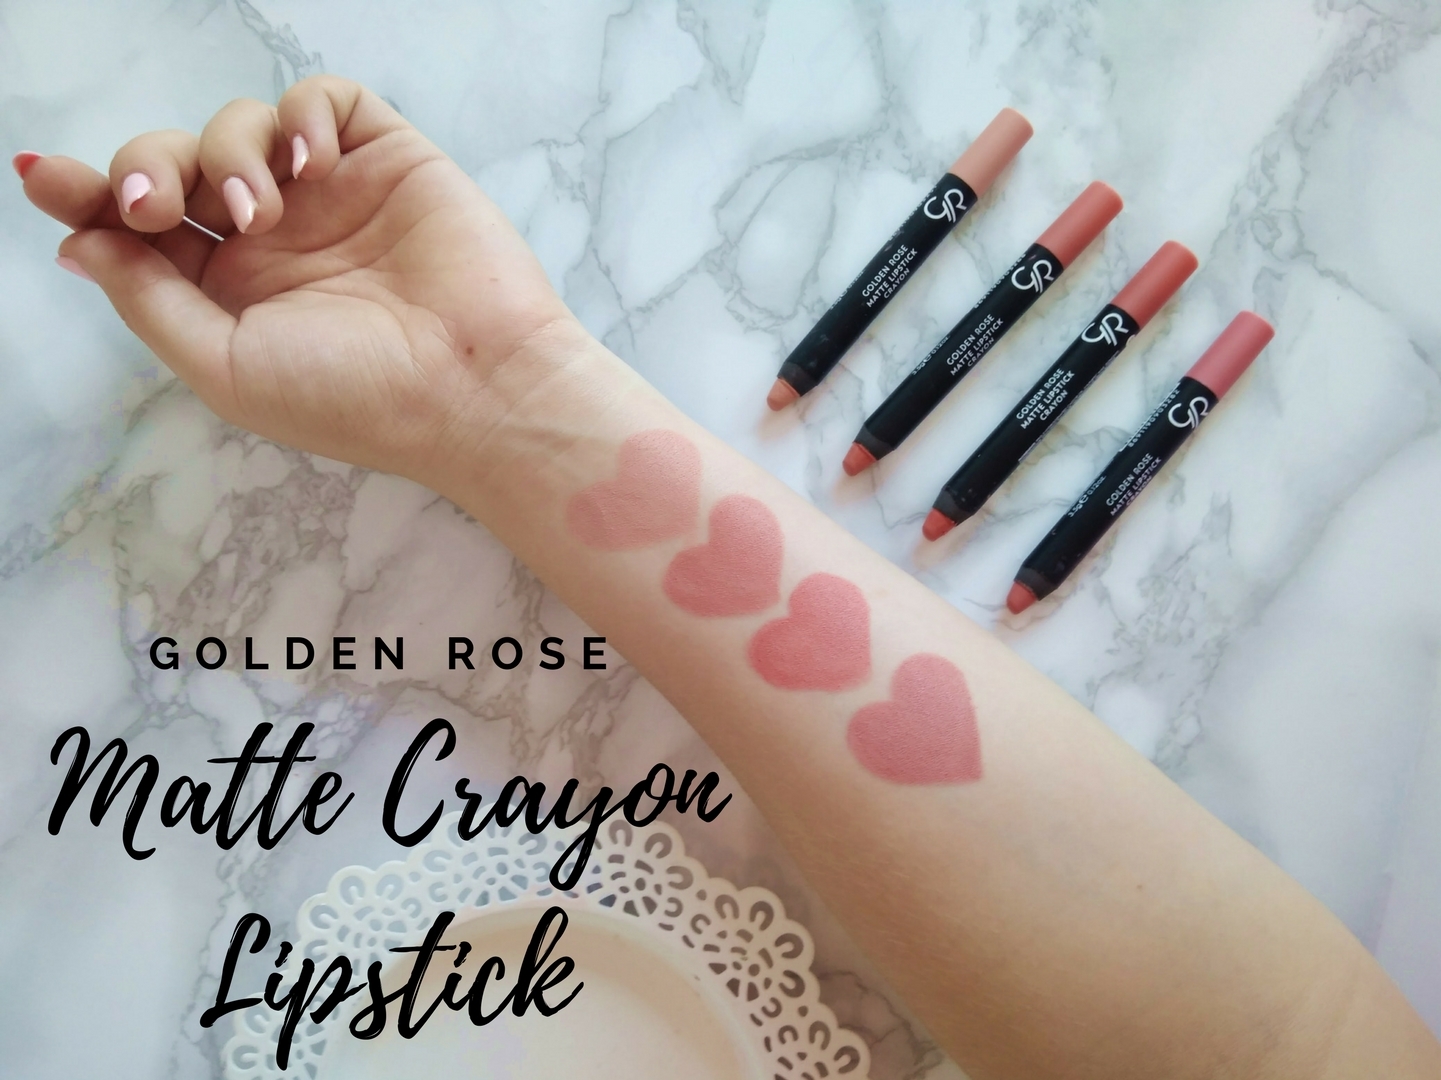 New shades of NUDE | Nowe kolory MatteCrayon Lipstick | Golden Rose | Emilia Miller